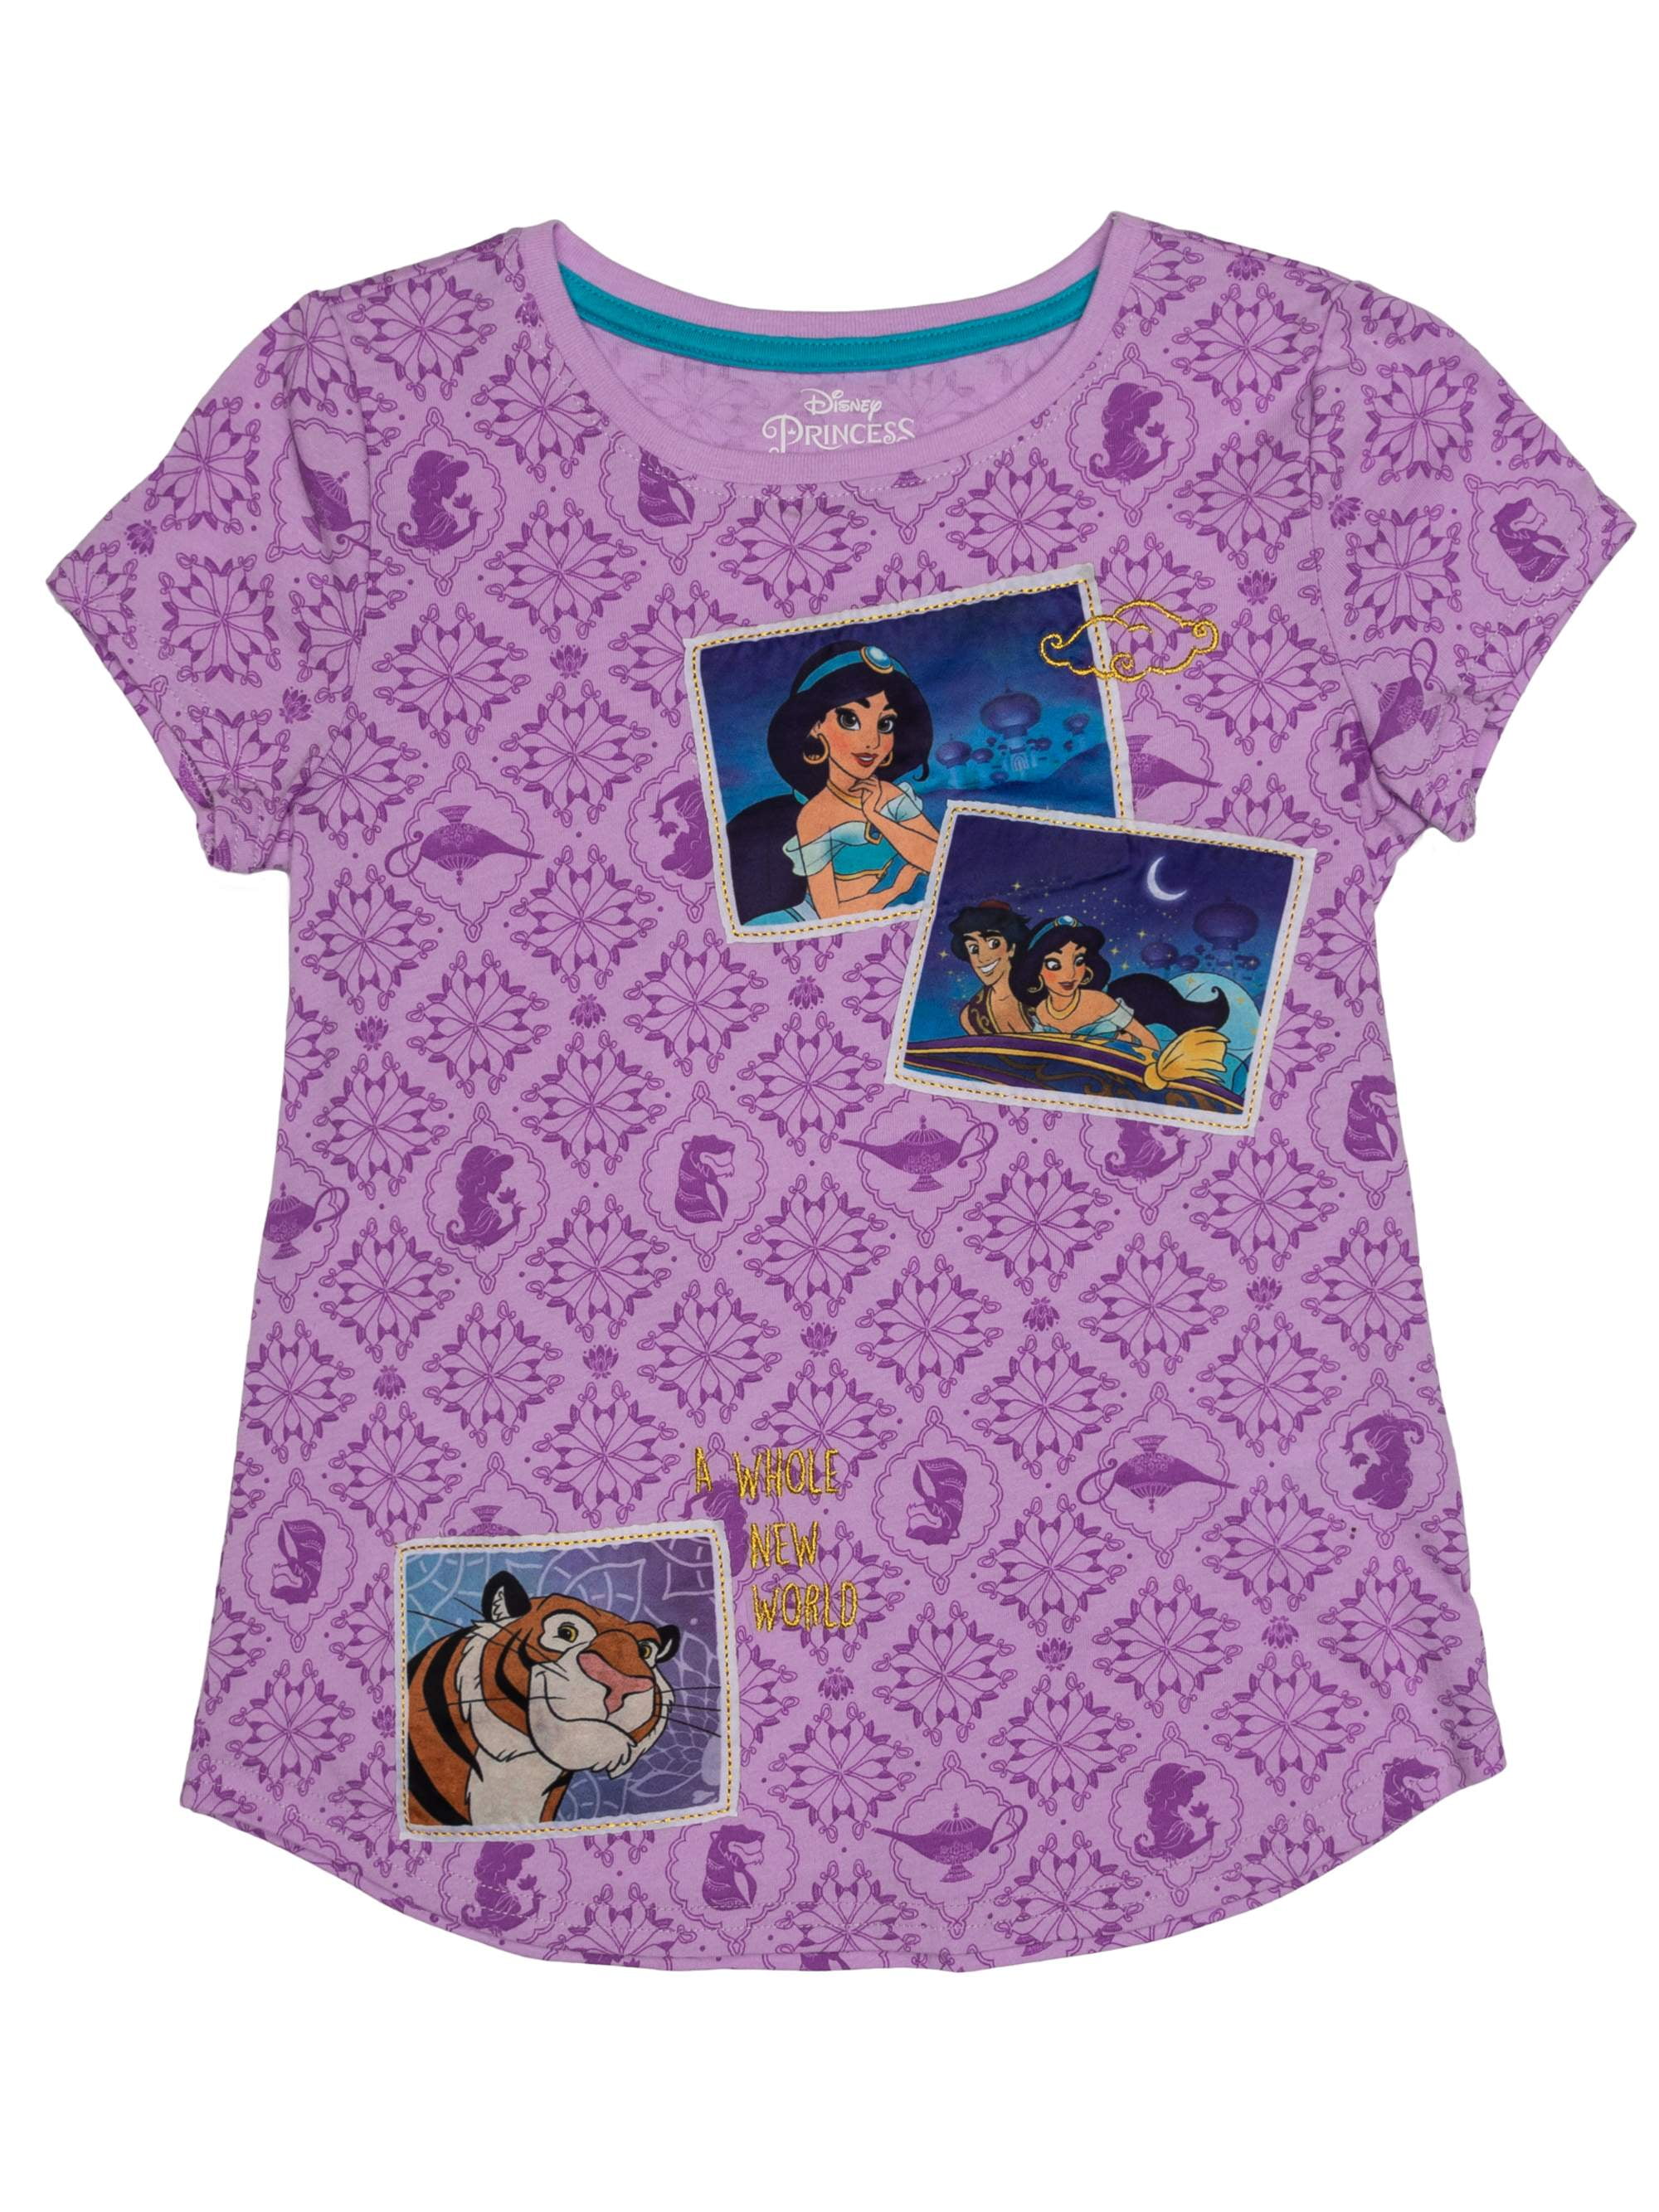 Disney Princess Jasmine Personalised Girls T-Shirt Age 3 Ideal Gift/Present 